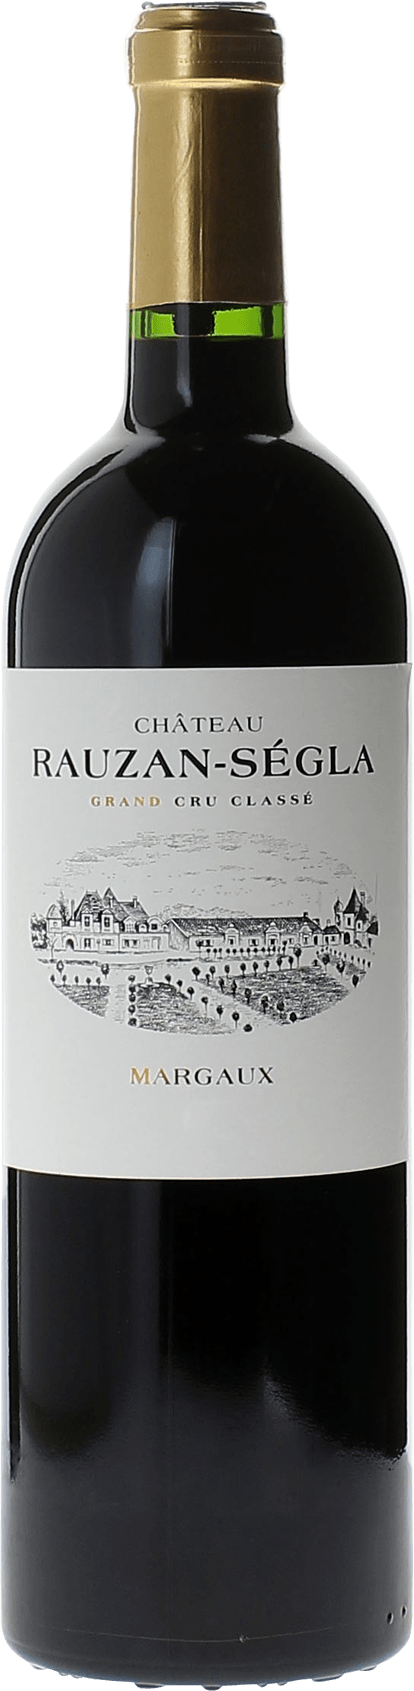 Rauzan-segla 1985 2me Grand cru class Margaux, Bordeaux rouge